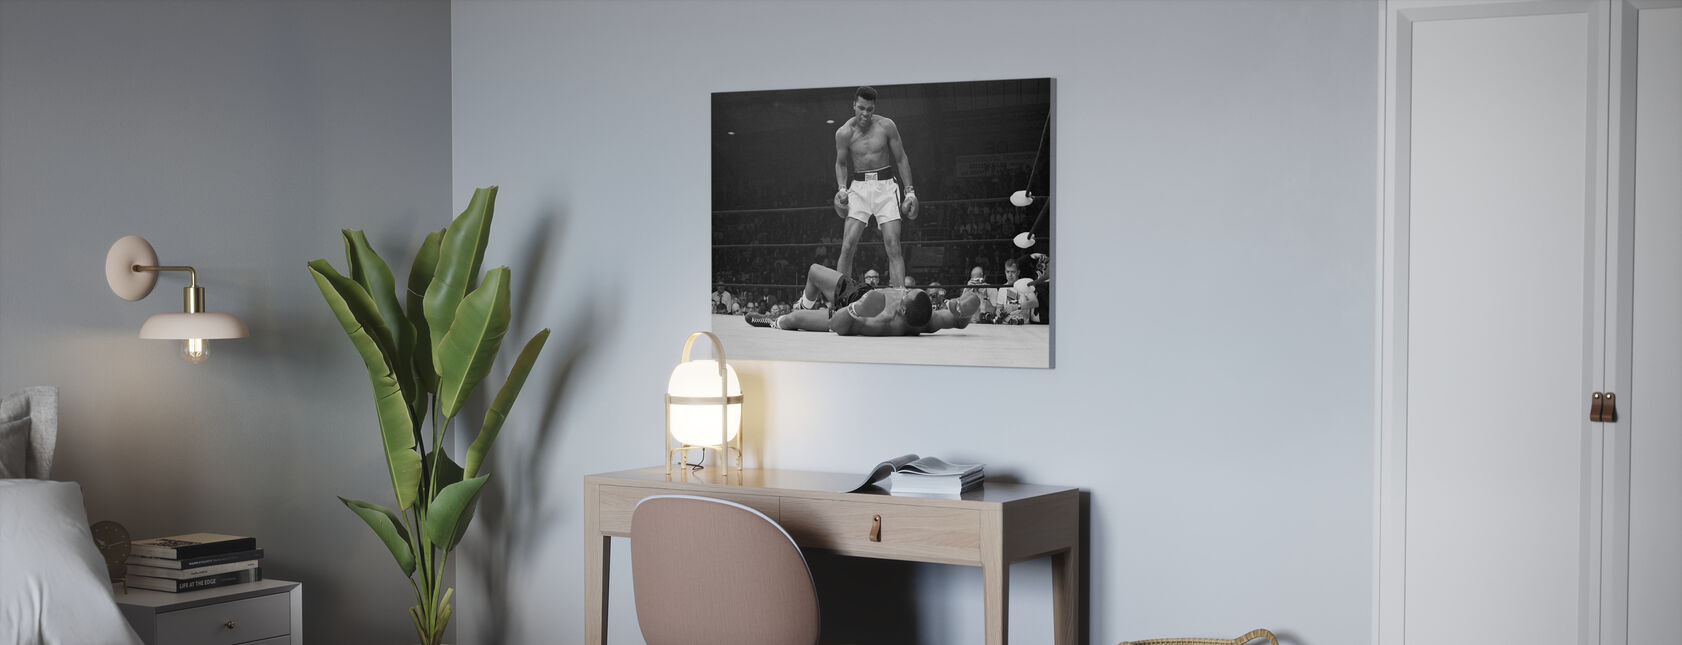 Muhammad Ali vs Sonny Liston - Impression sur toile - Bureau